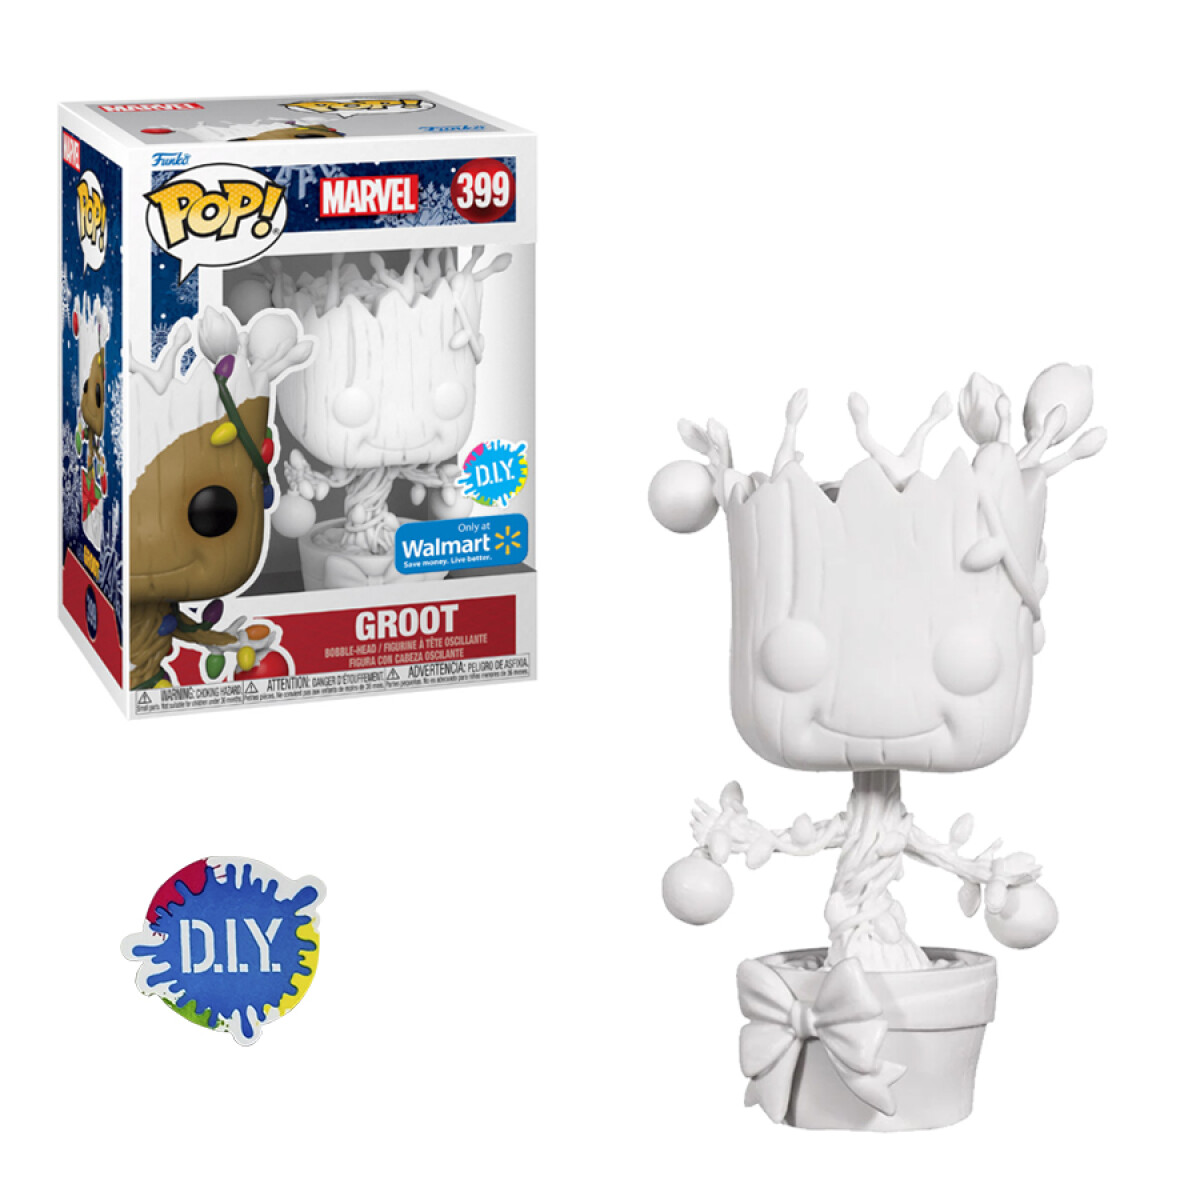 Groot DIY - Marvel Holiday [D.I.Y] - 399 